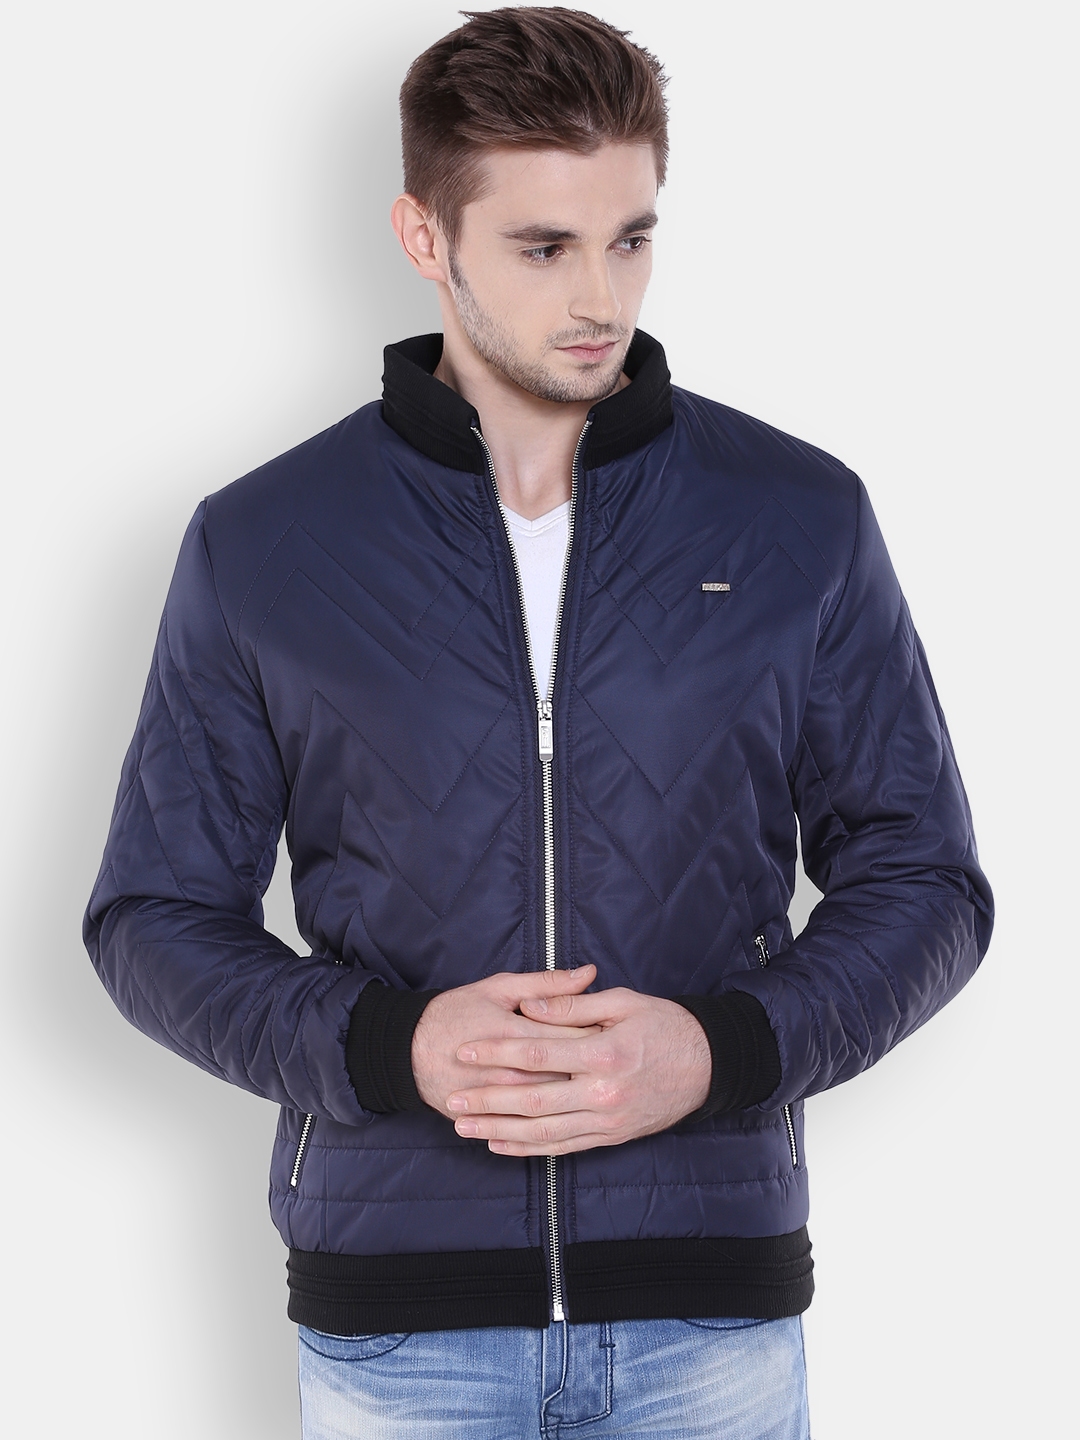 Buy Arrow Sport Navy Blue Bomber Jacket - Jackets for Men 1571561 | Myntra